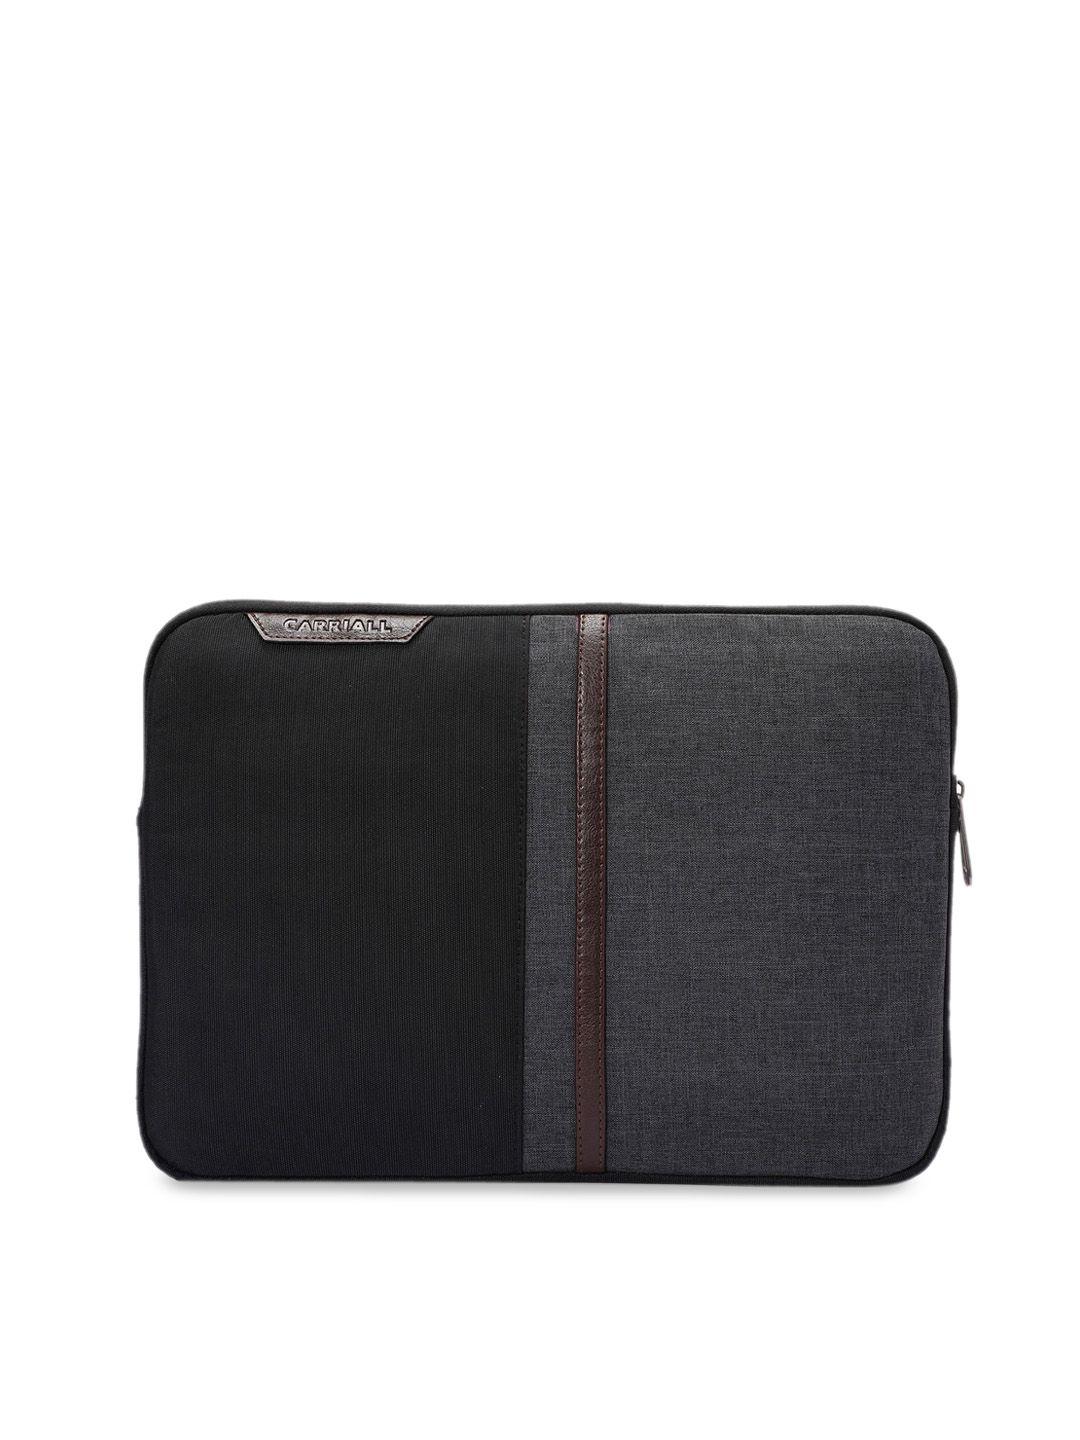 carriall unisex black colourblocked 14 inch laptop sleeve